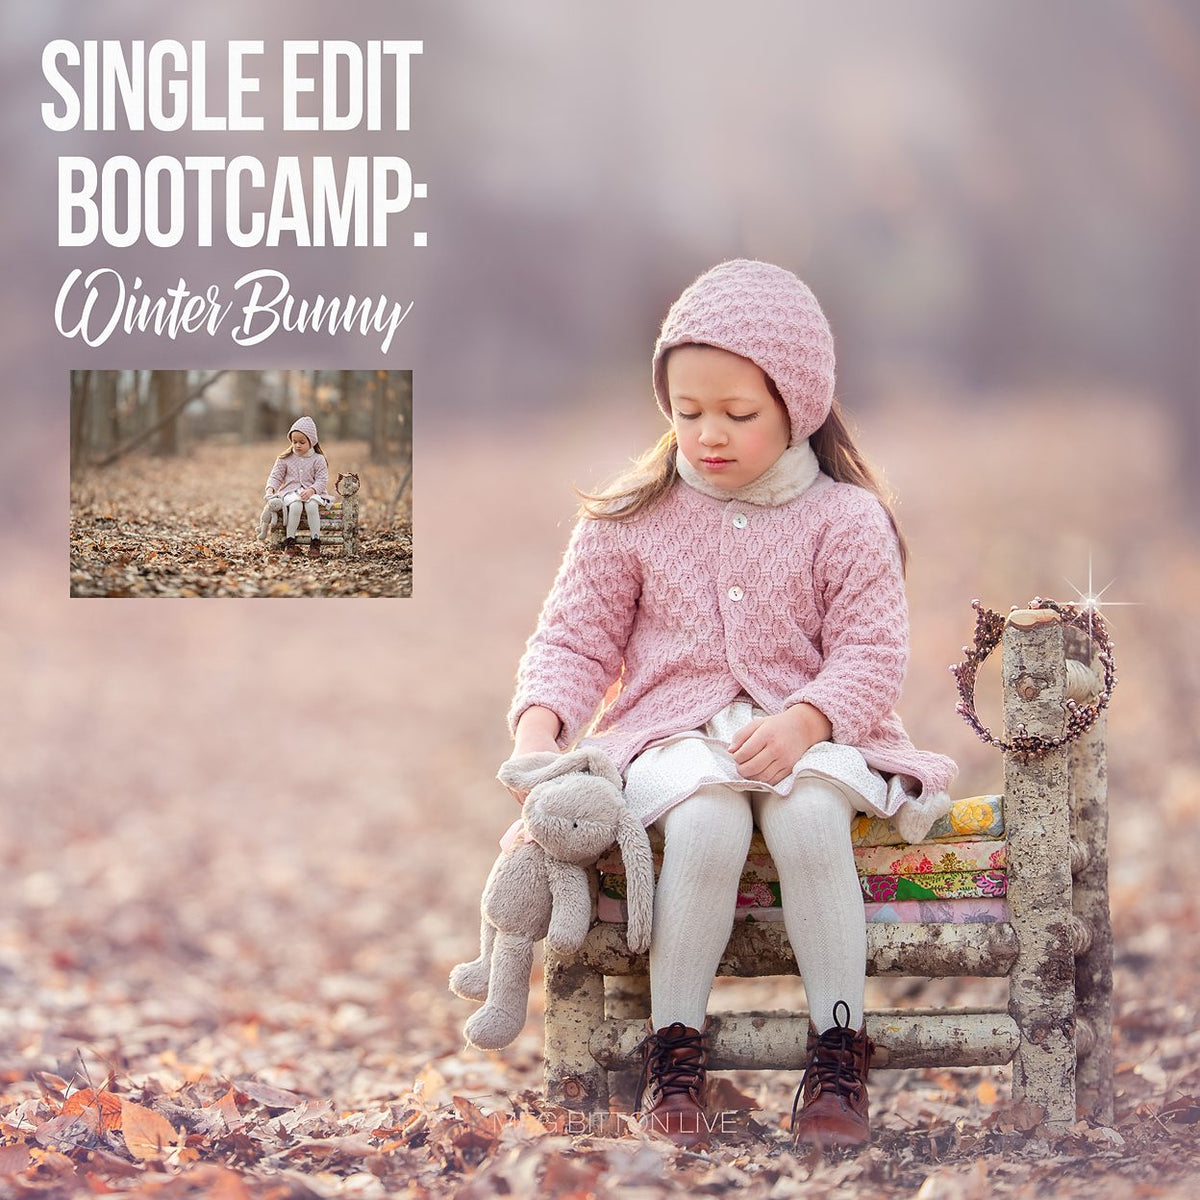 Silent Edit Bootcamp - Winter Bunny - Meg Bitton Productions